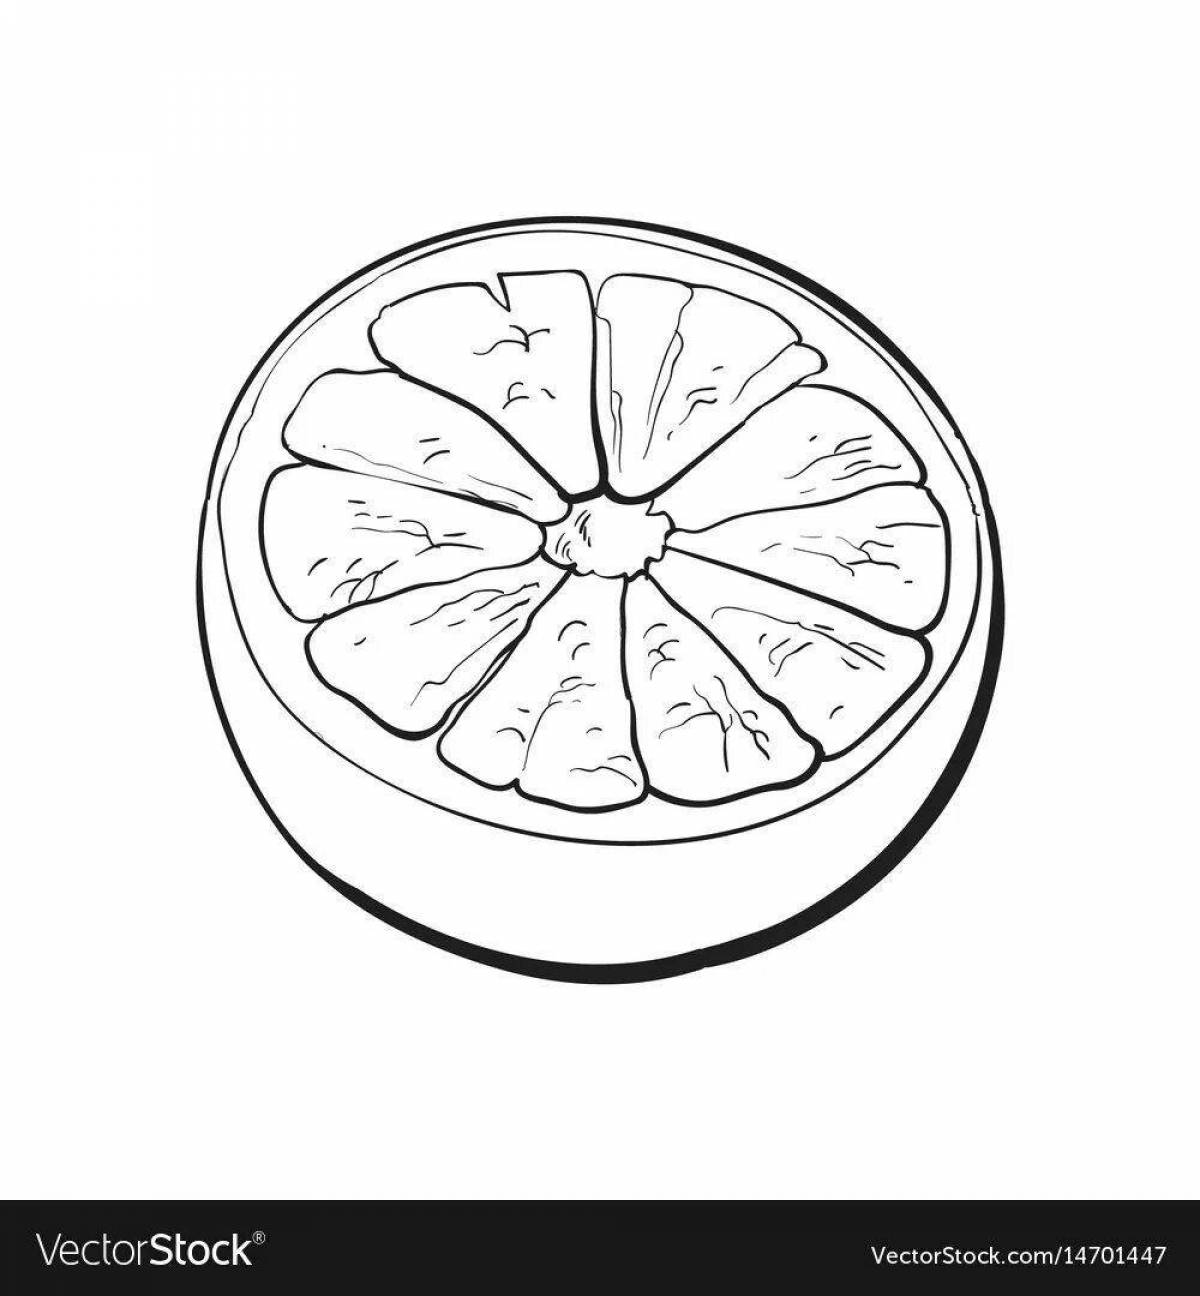 Coloring dreamy grapefruit